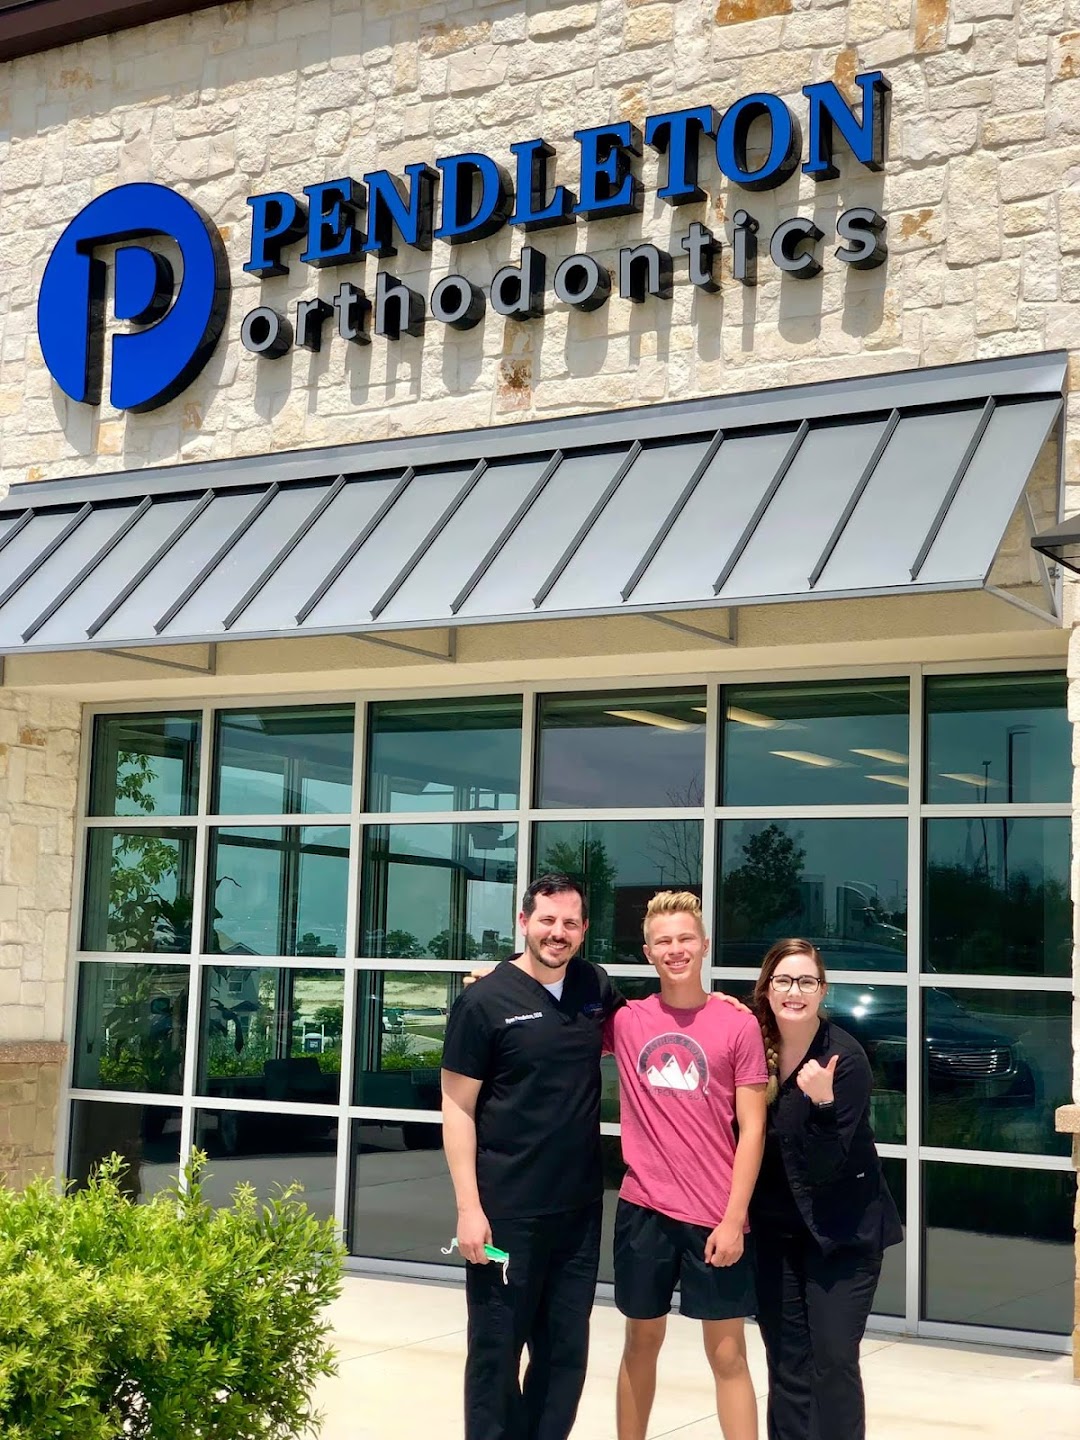 Pendleton Orthodontics